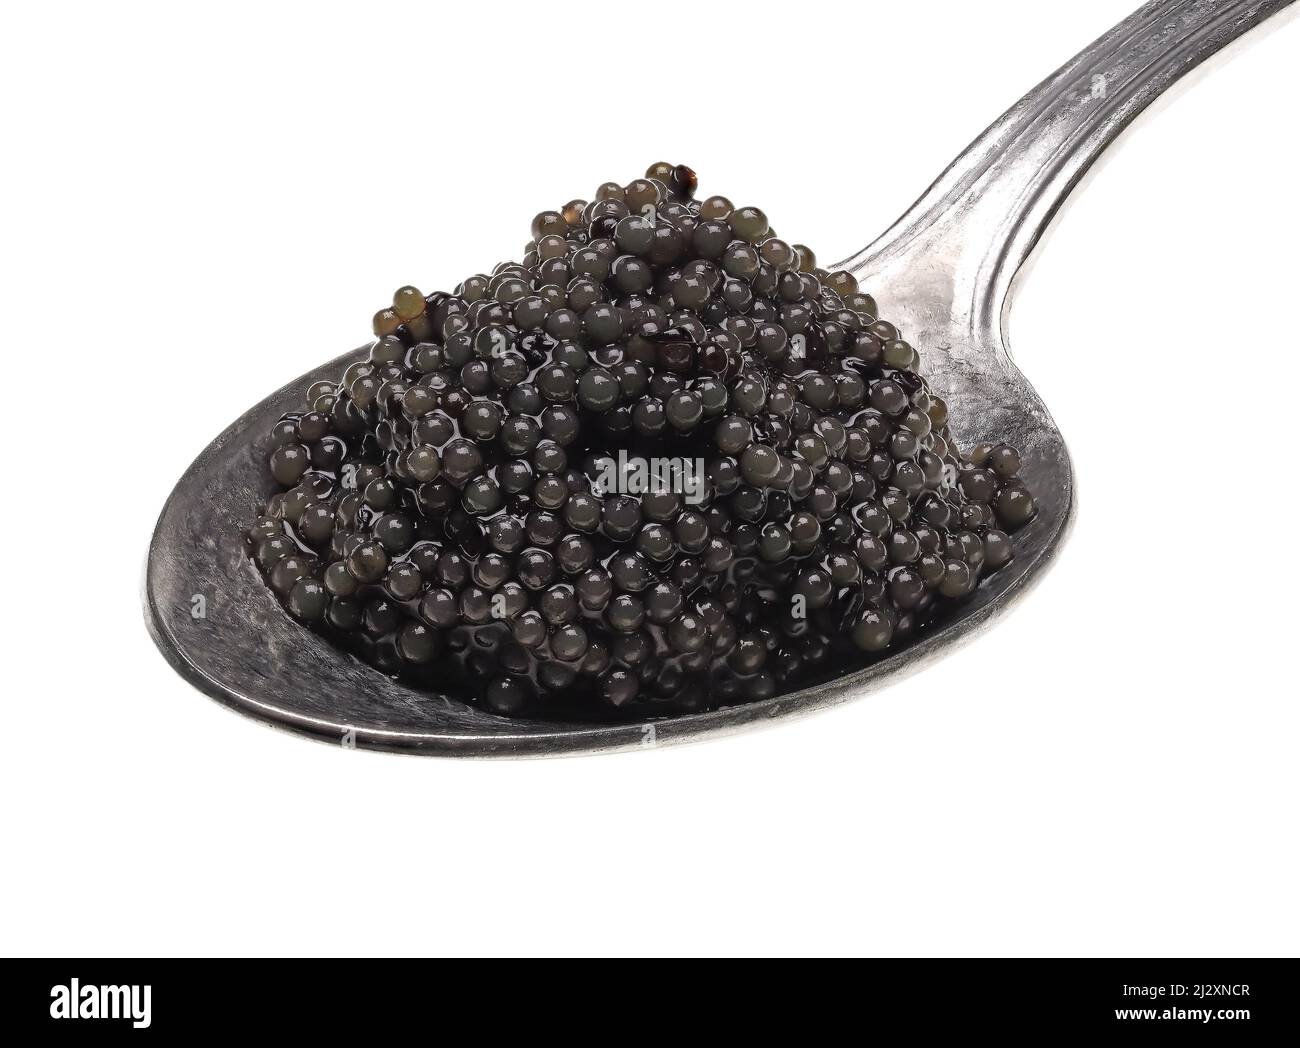 Black lumpfish roe - eggs of lumpfish colored black to imitate caviar Stock Photo